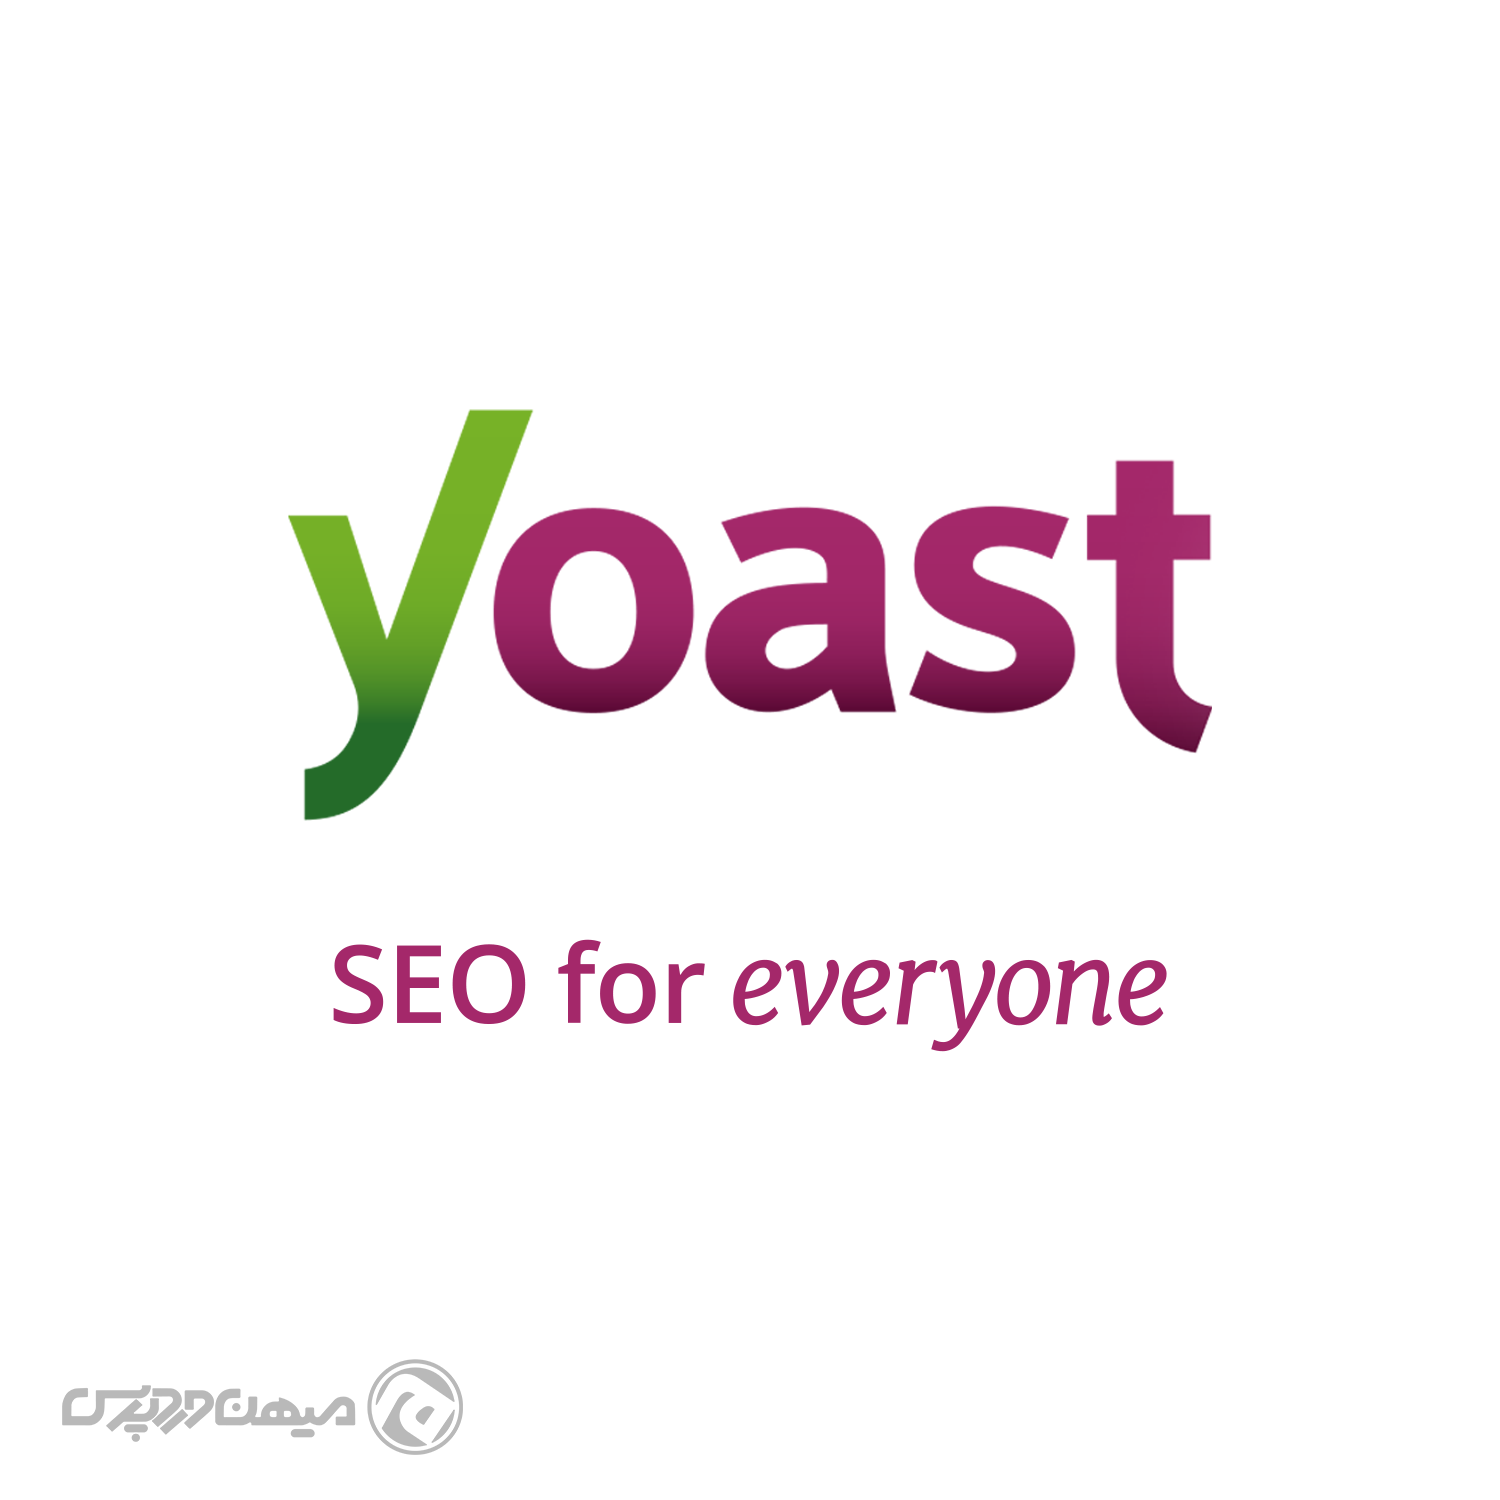 download yoastseo